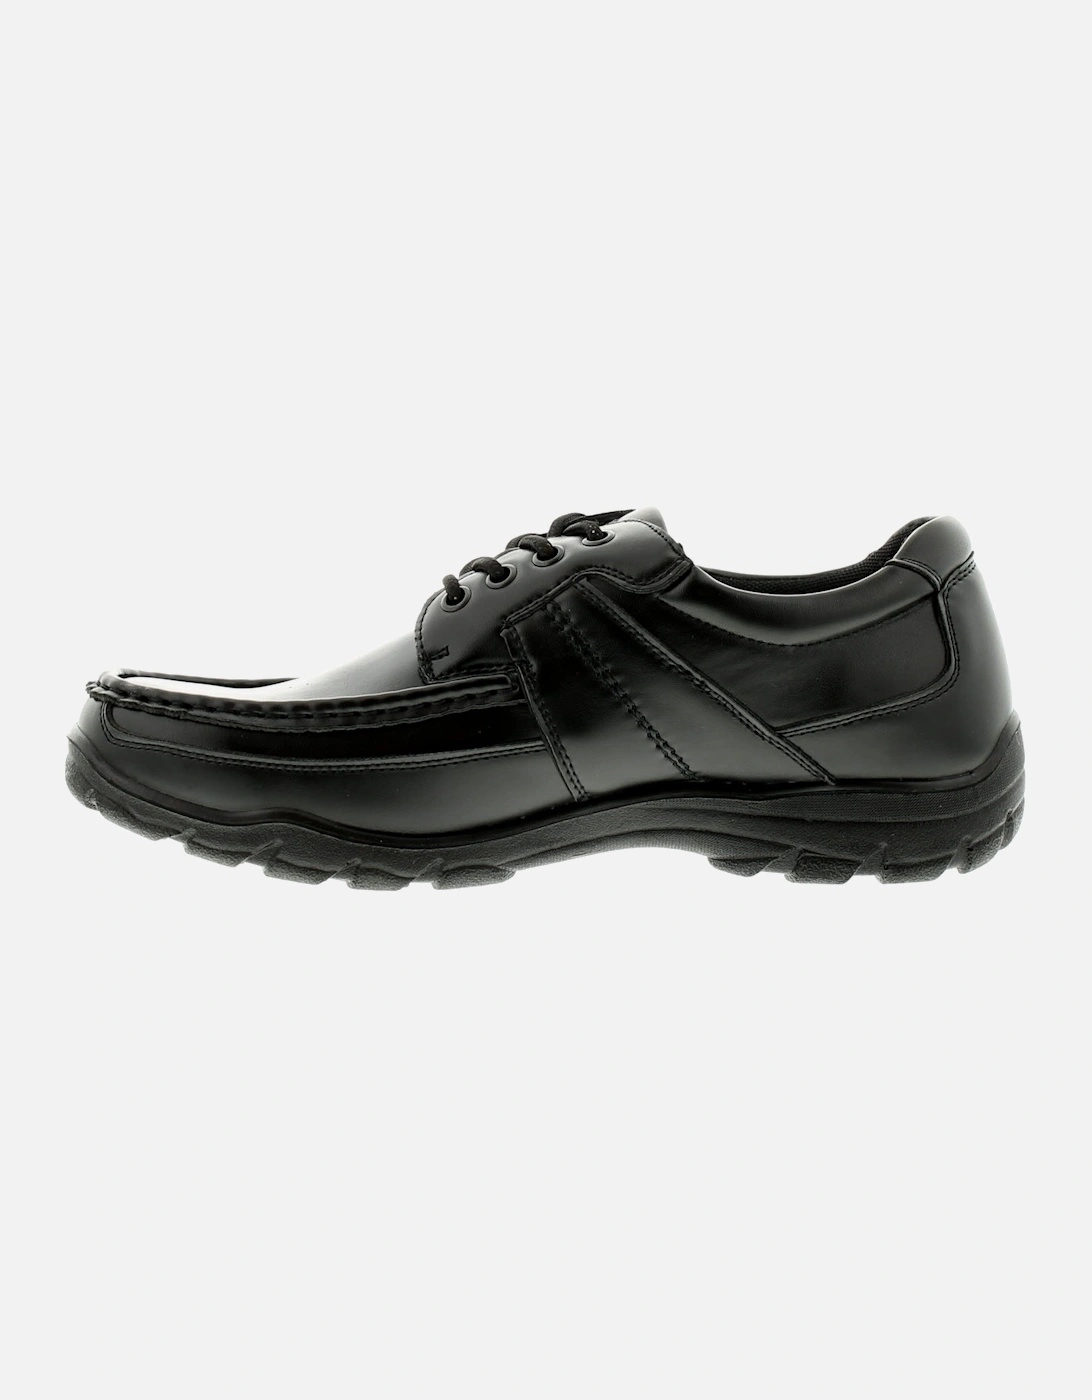 Mens Shoes Work School Rocket Lace Up black UK Size